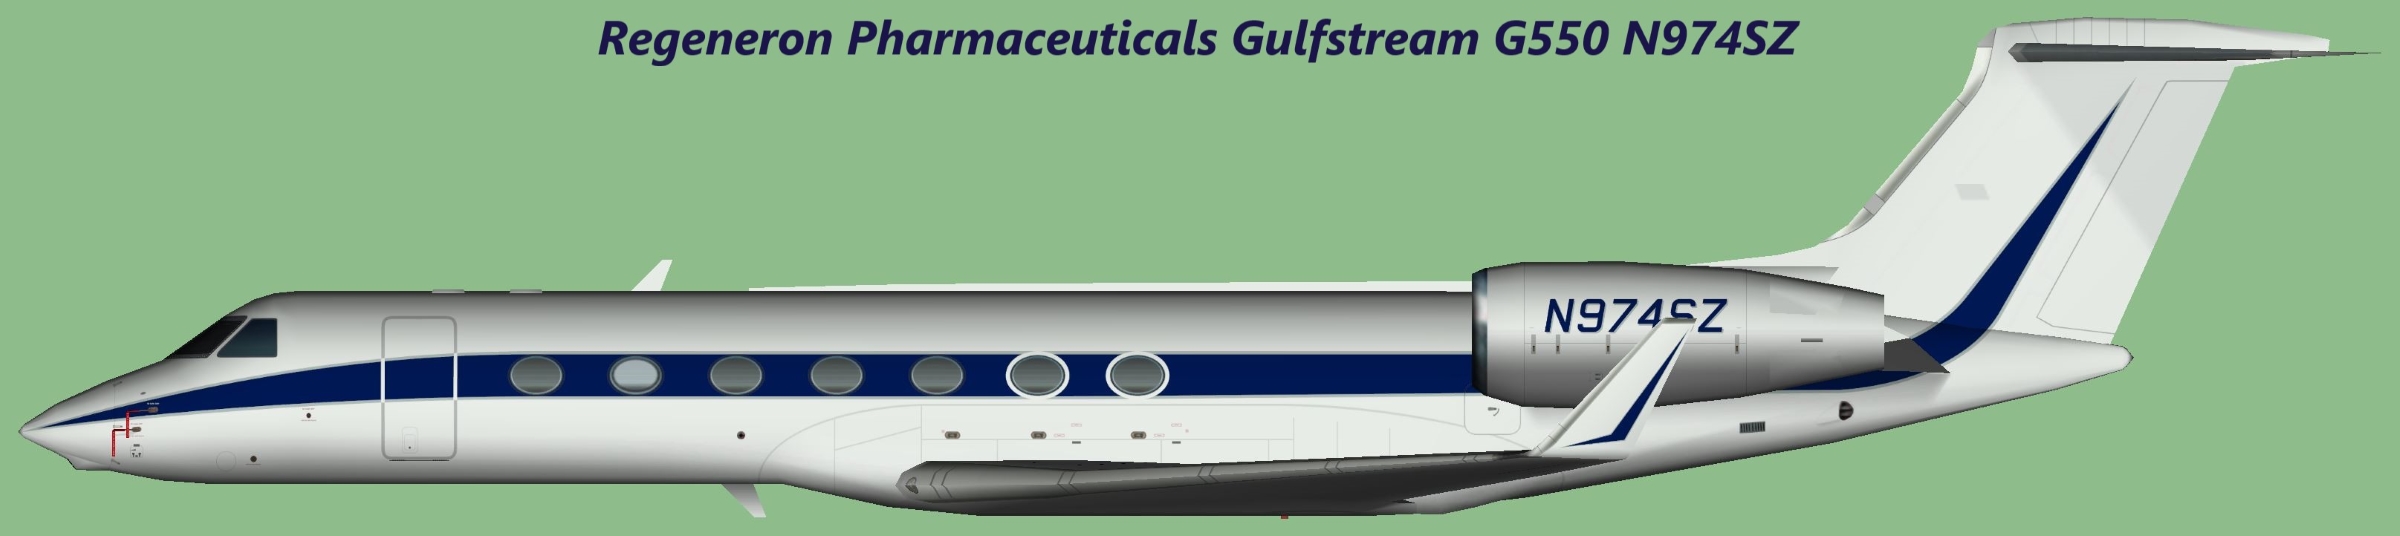 Regeneron Pharmaceuticals Gulfstream G550